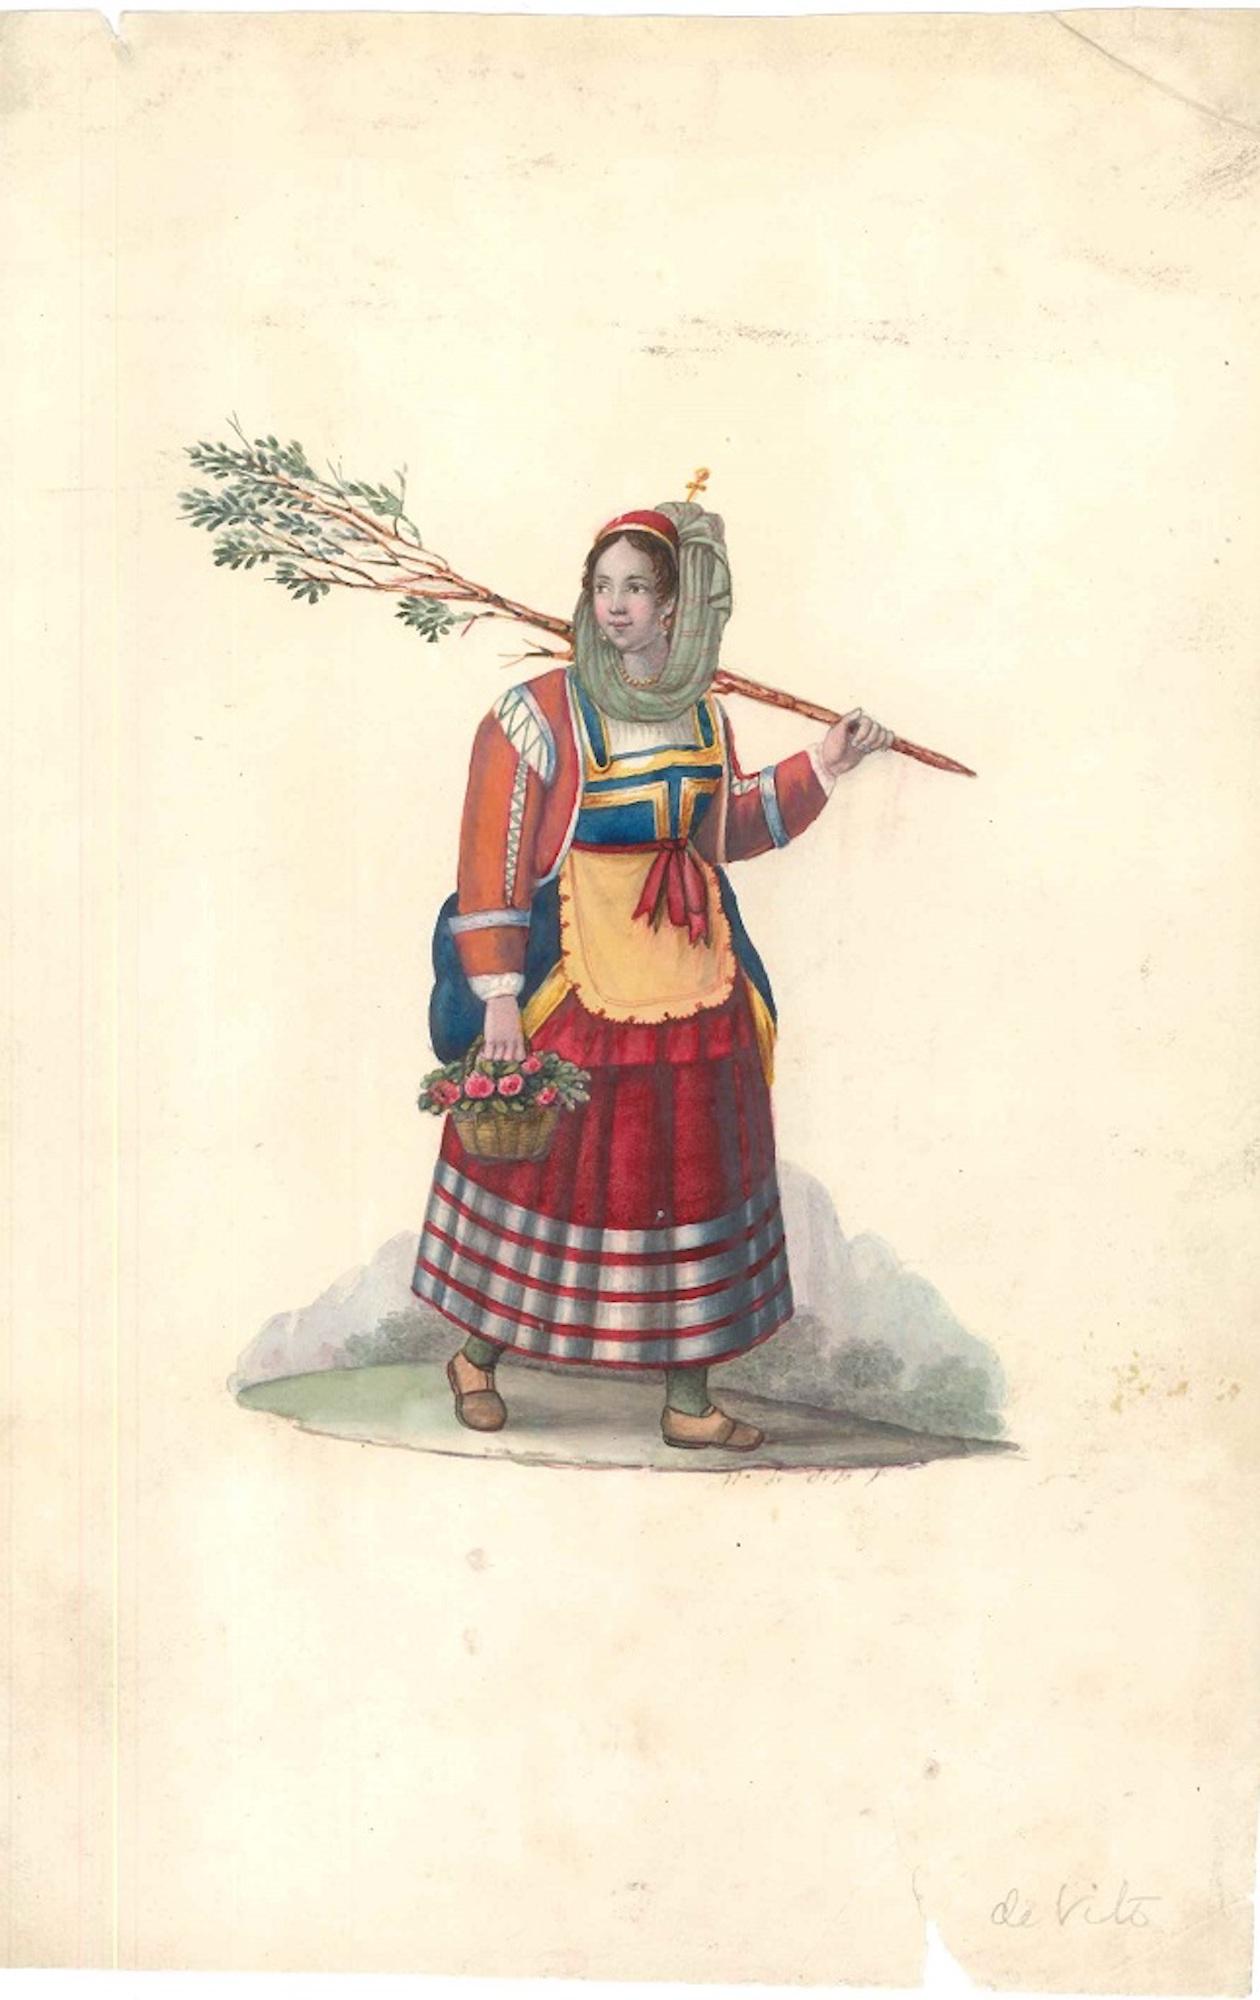 Woman with Flowers - Watercolor by M. De Vito - 1820 ca. - Art by Michela De Vito